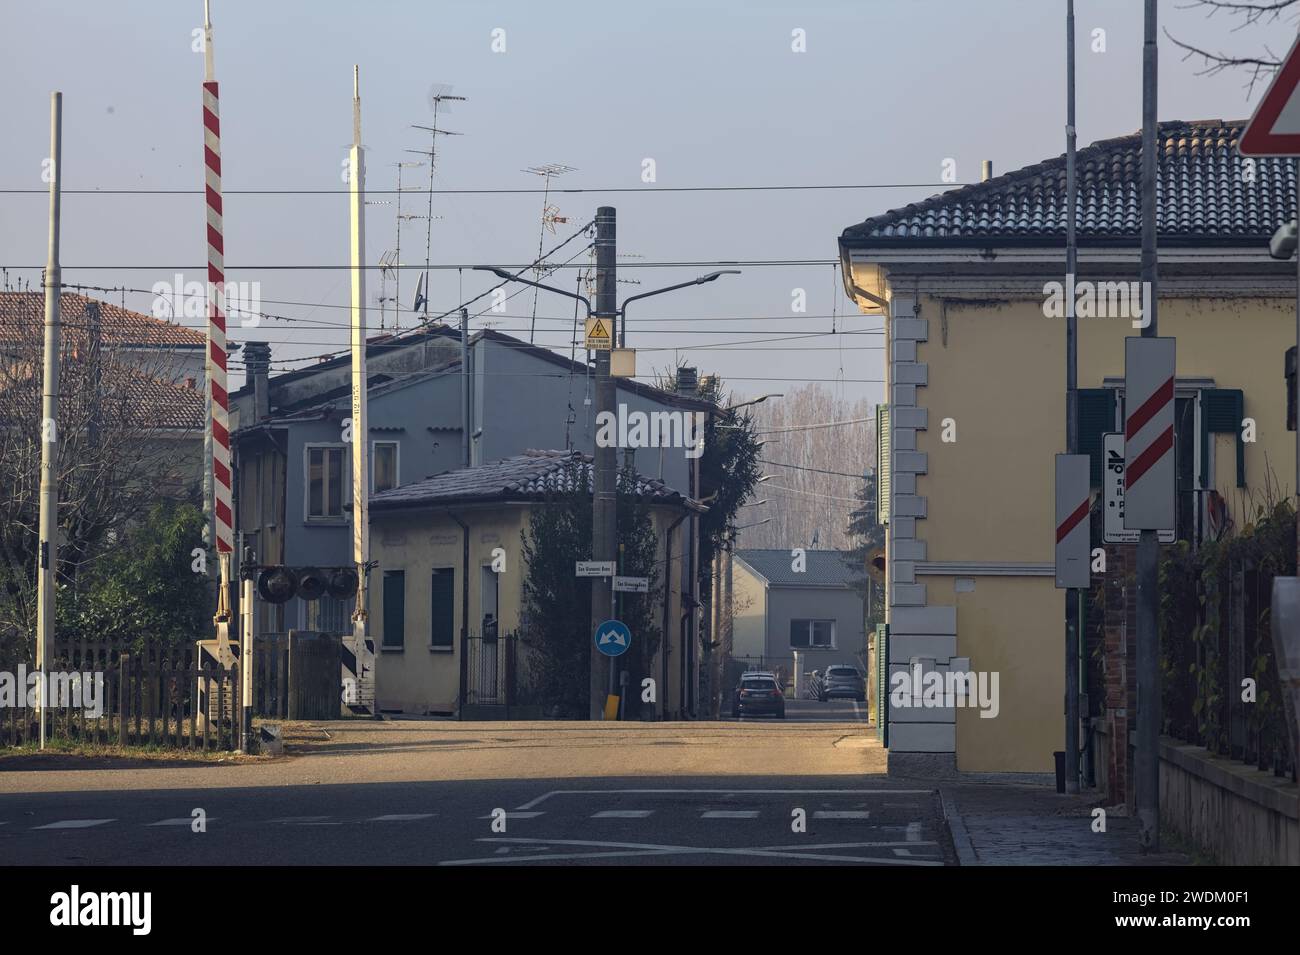 Railroad crossing in a village Stock Photo